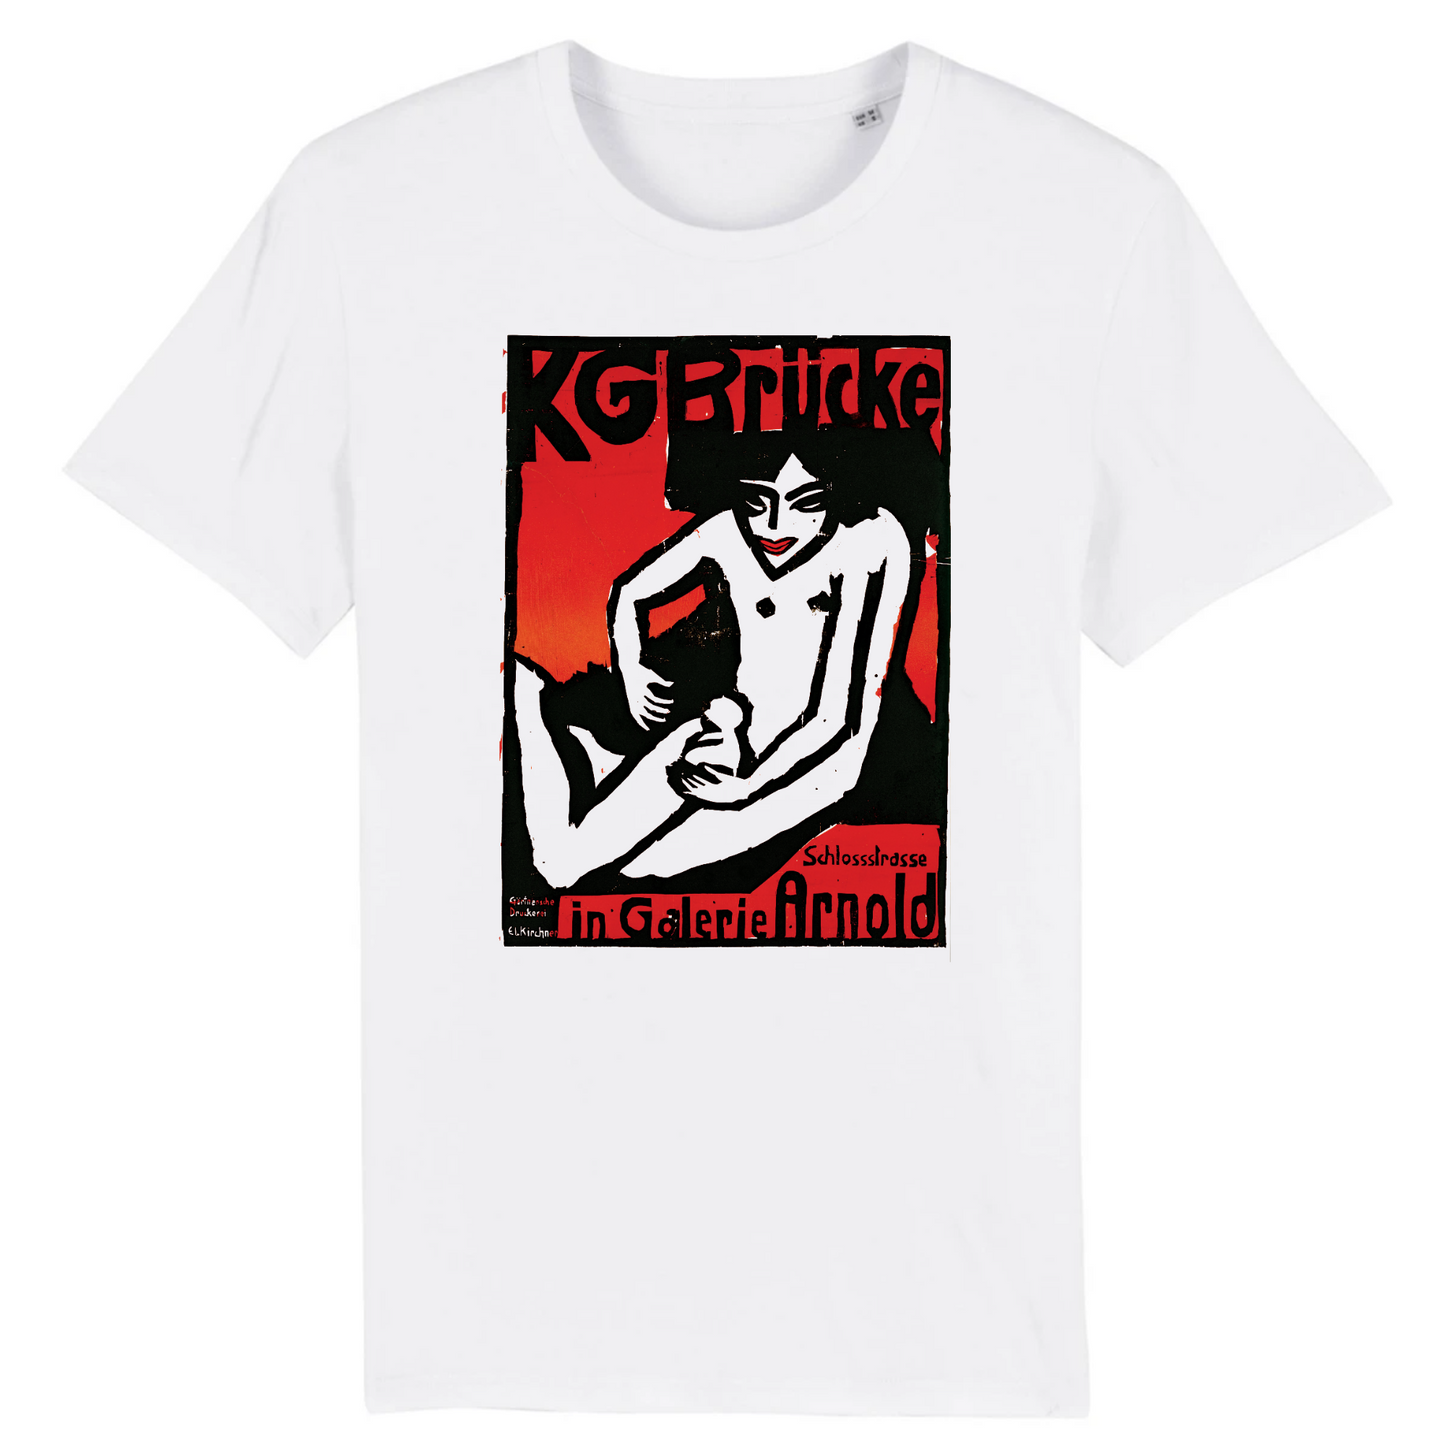 Die Brucke by Ernst Ludwig Kirchner - Organic Cotton T-Shirt